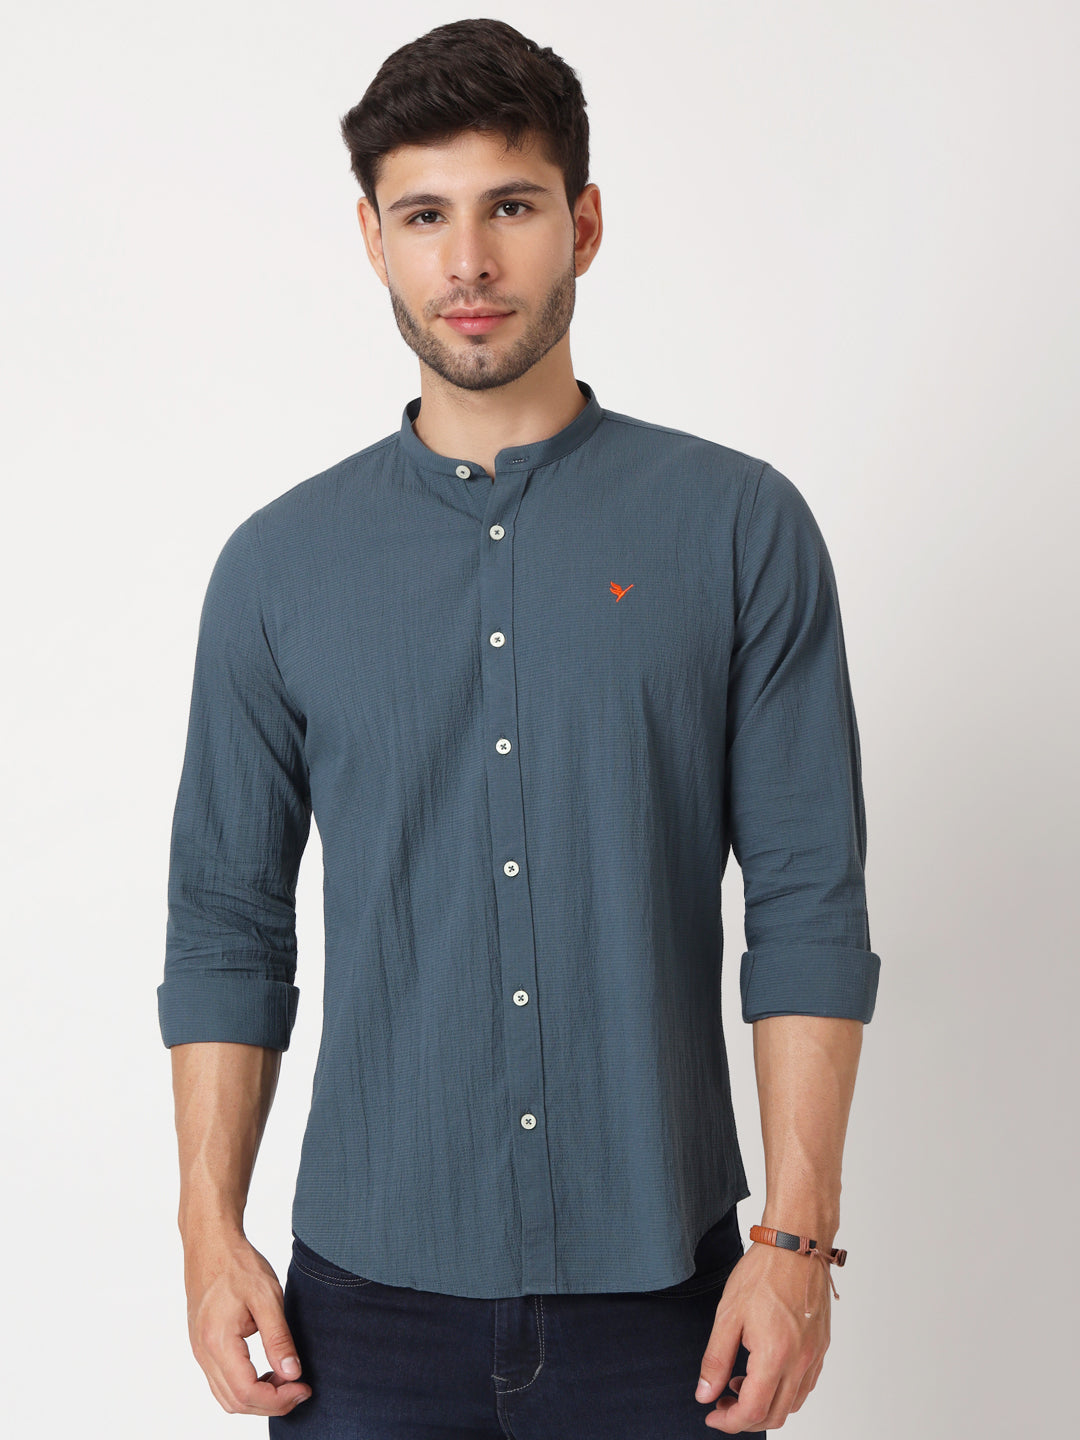 Amswan Premium Men's Blue Crinkle Cotton Shirt - Mandarin Collar, Long Sleeves